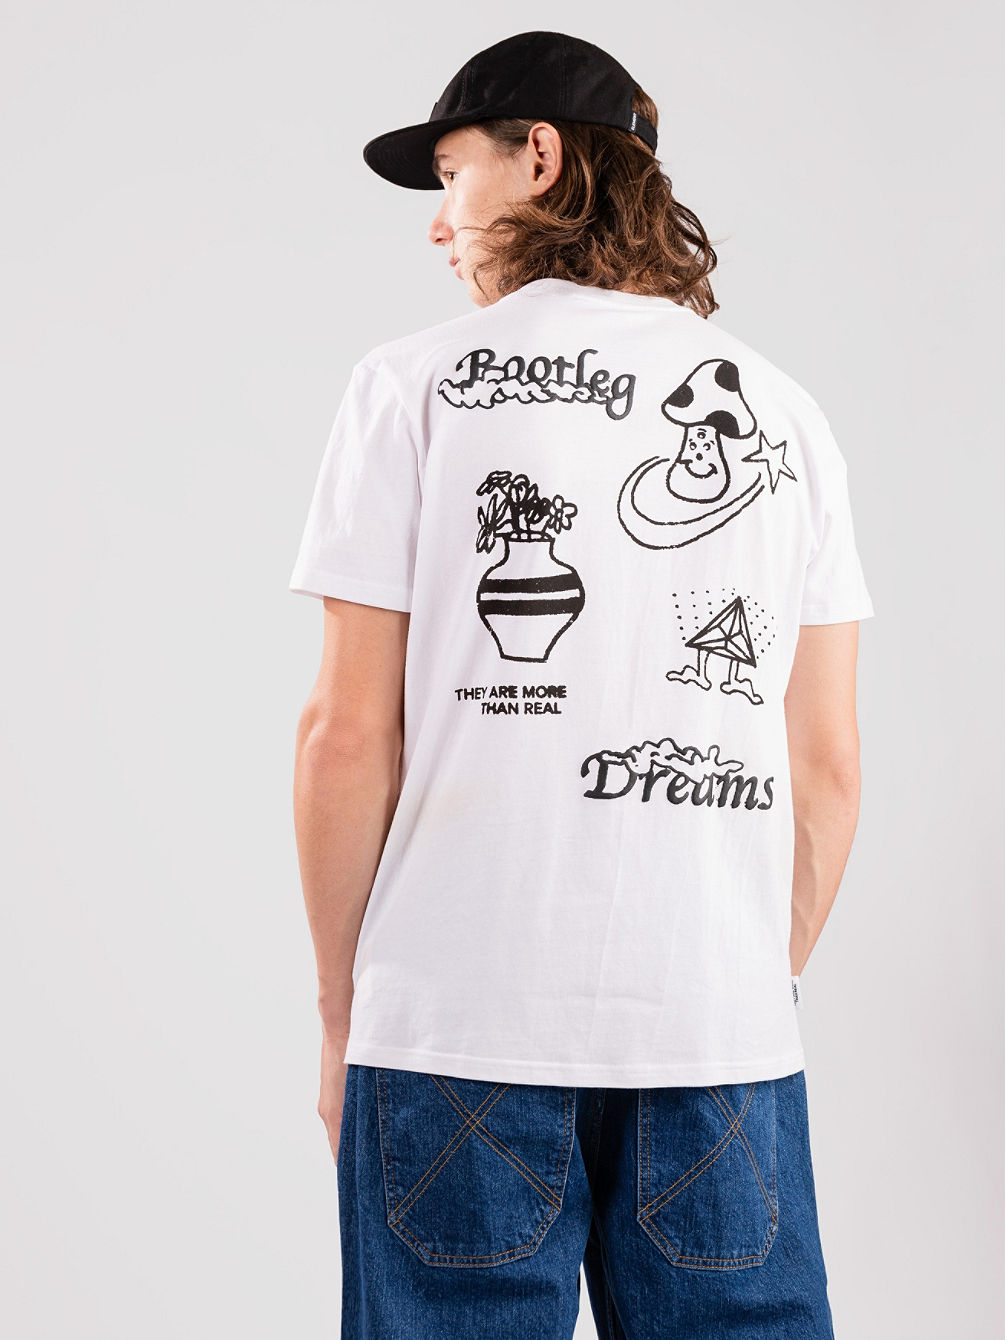 Bootleg Dreams T-Shirt